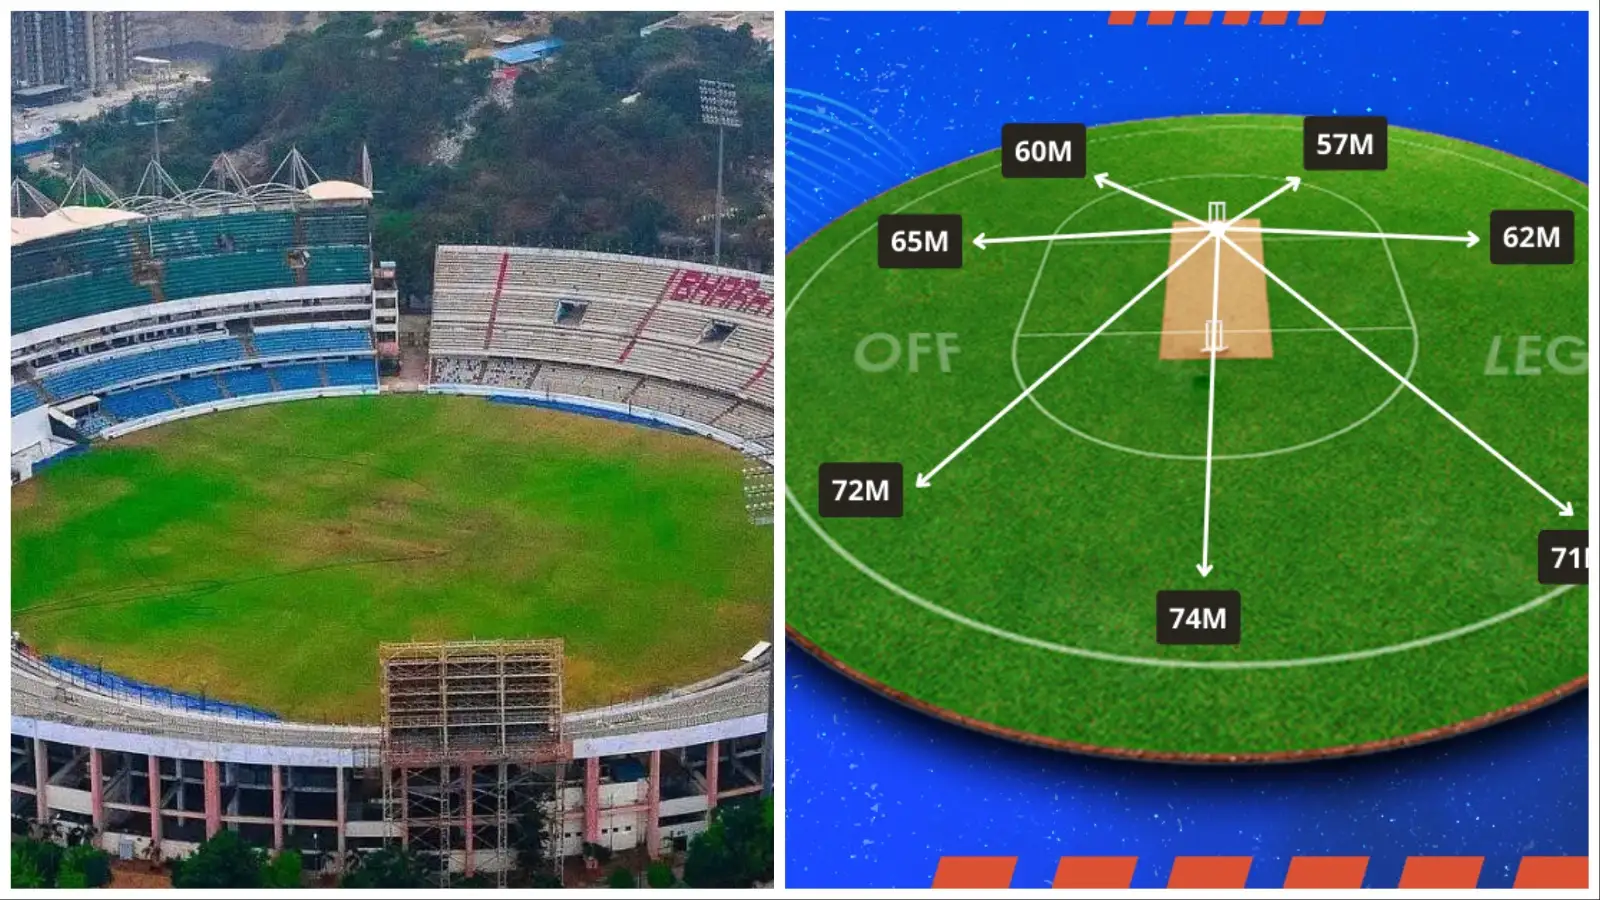 Rajiv Gandhi International Cricket Stadium Hyderabad Boundary Length and Seating Capacity